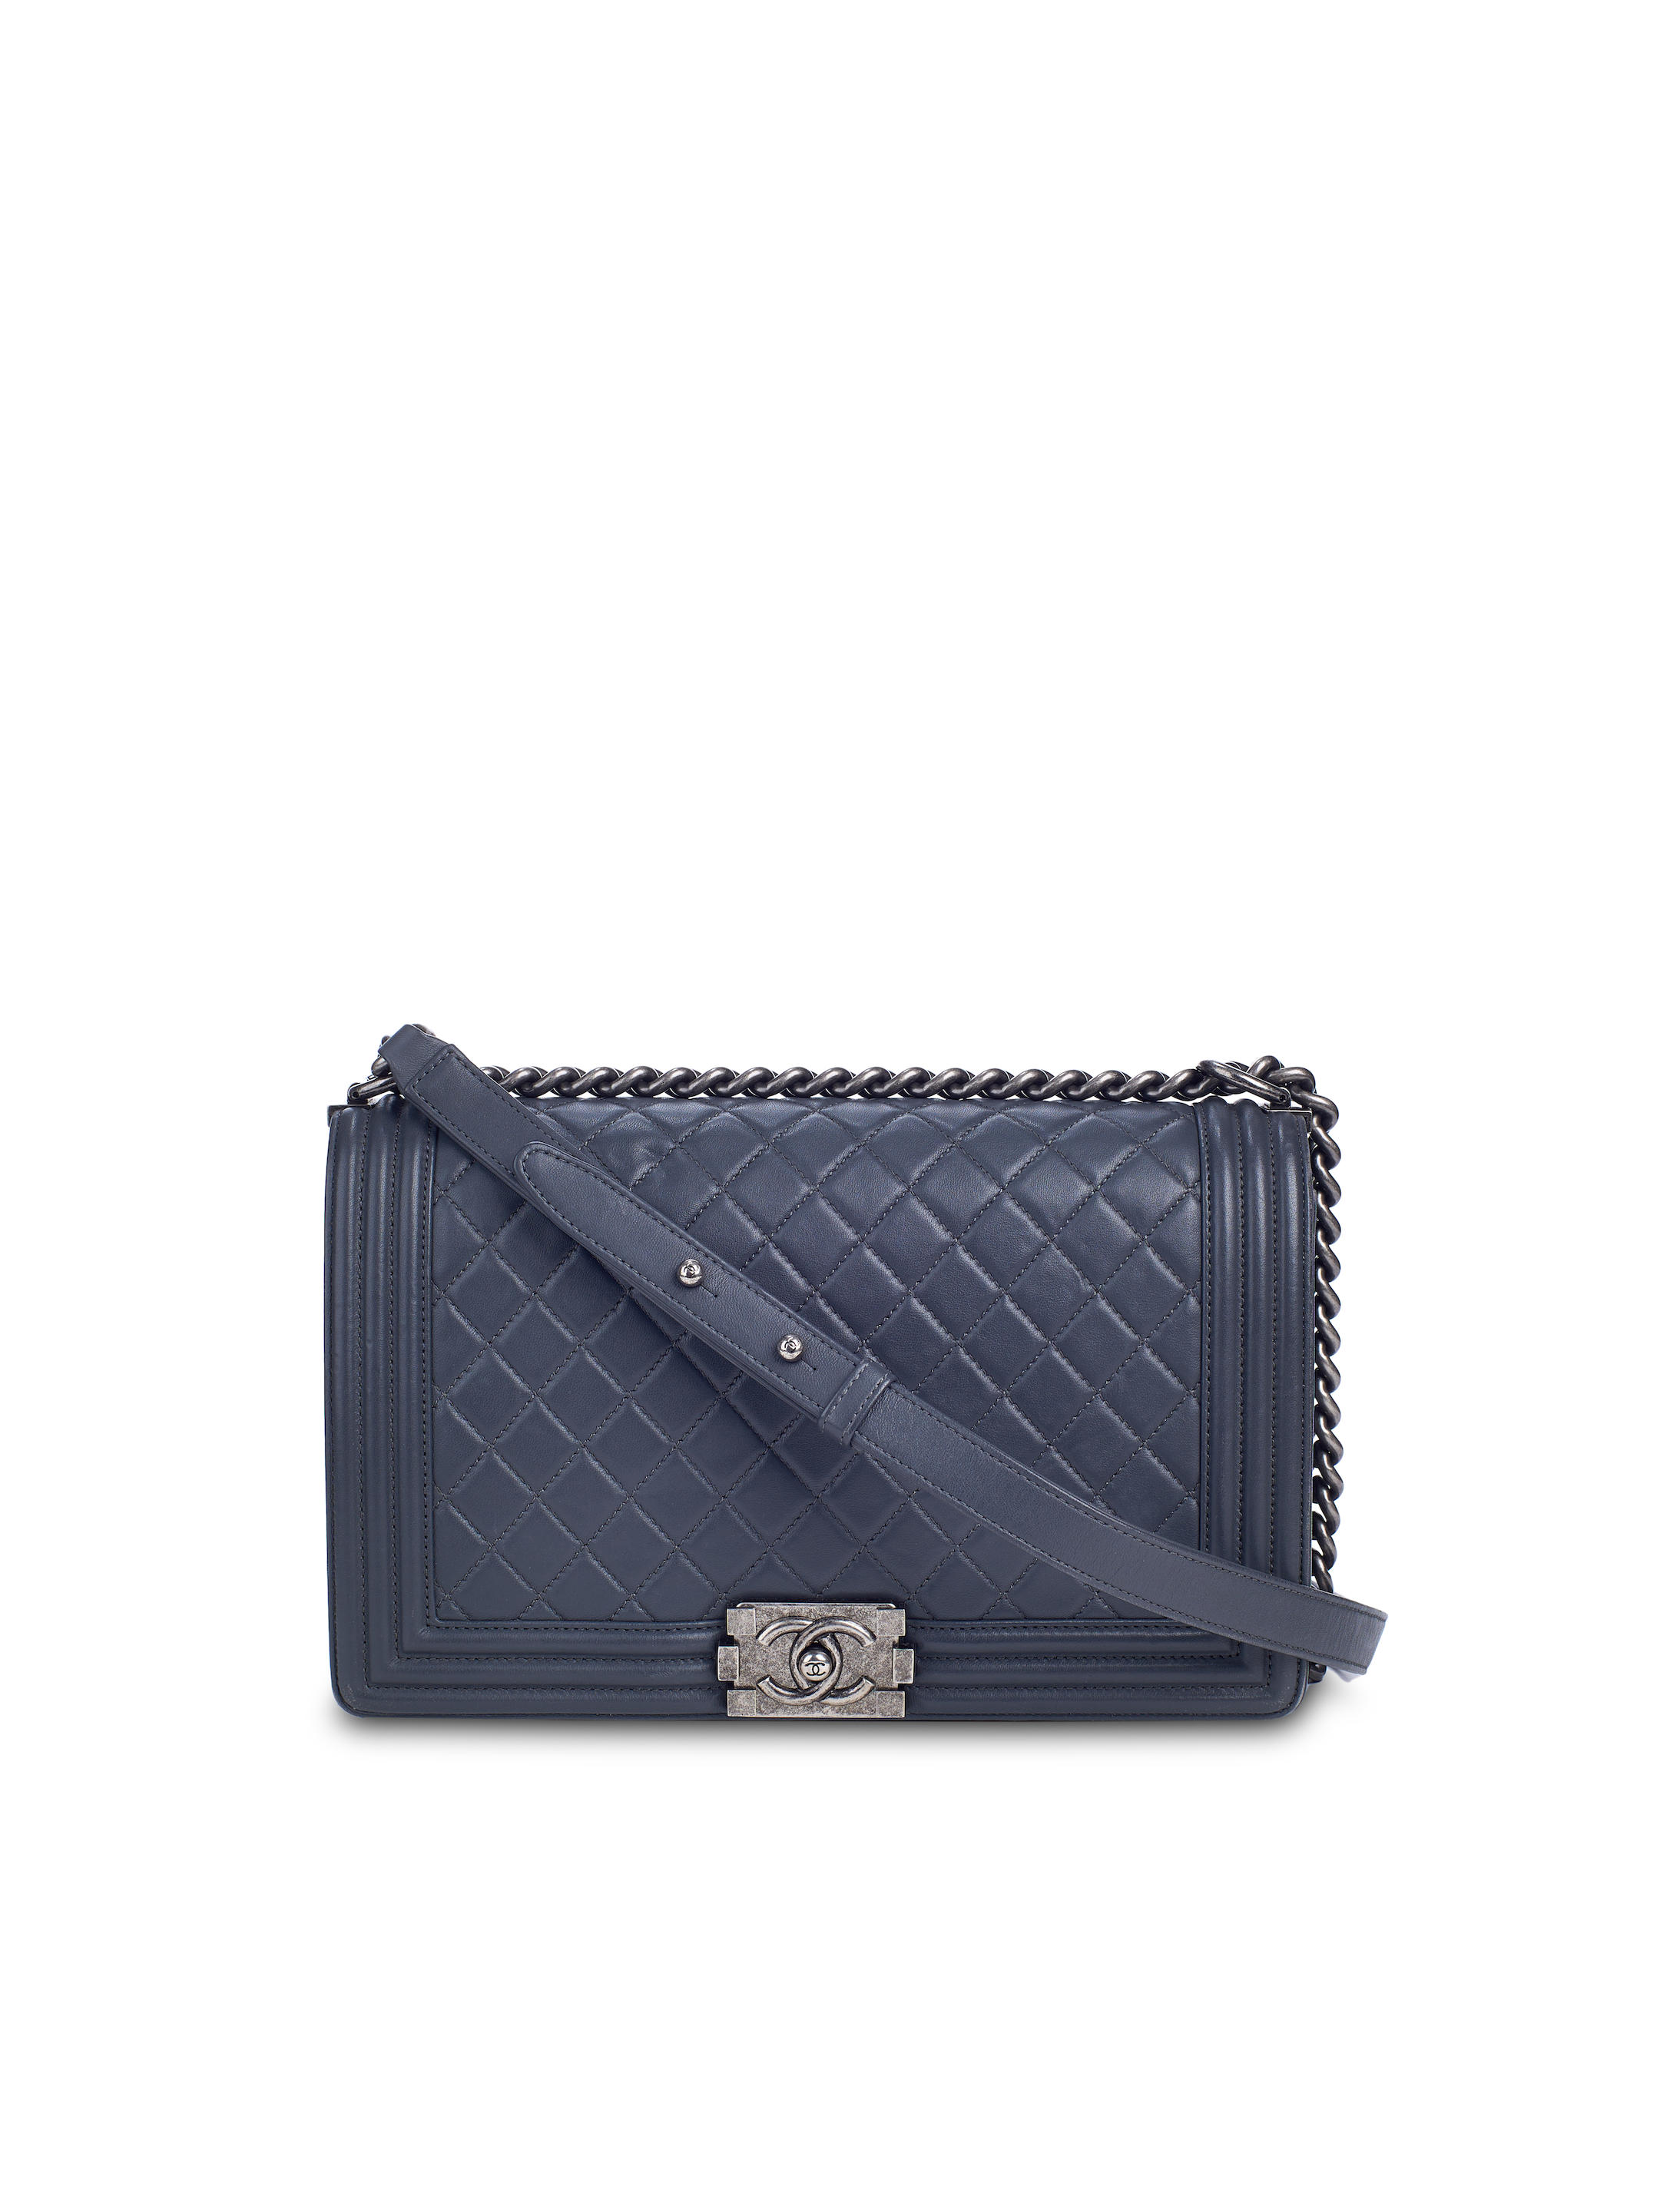 Louis-Vuitton-Banner-5-980x420, chanel bags